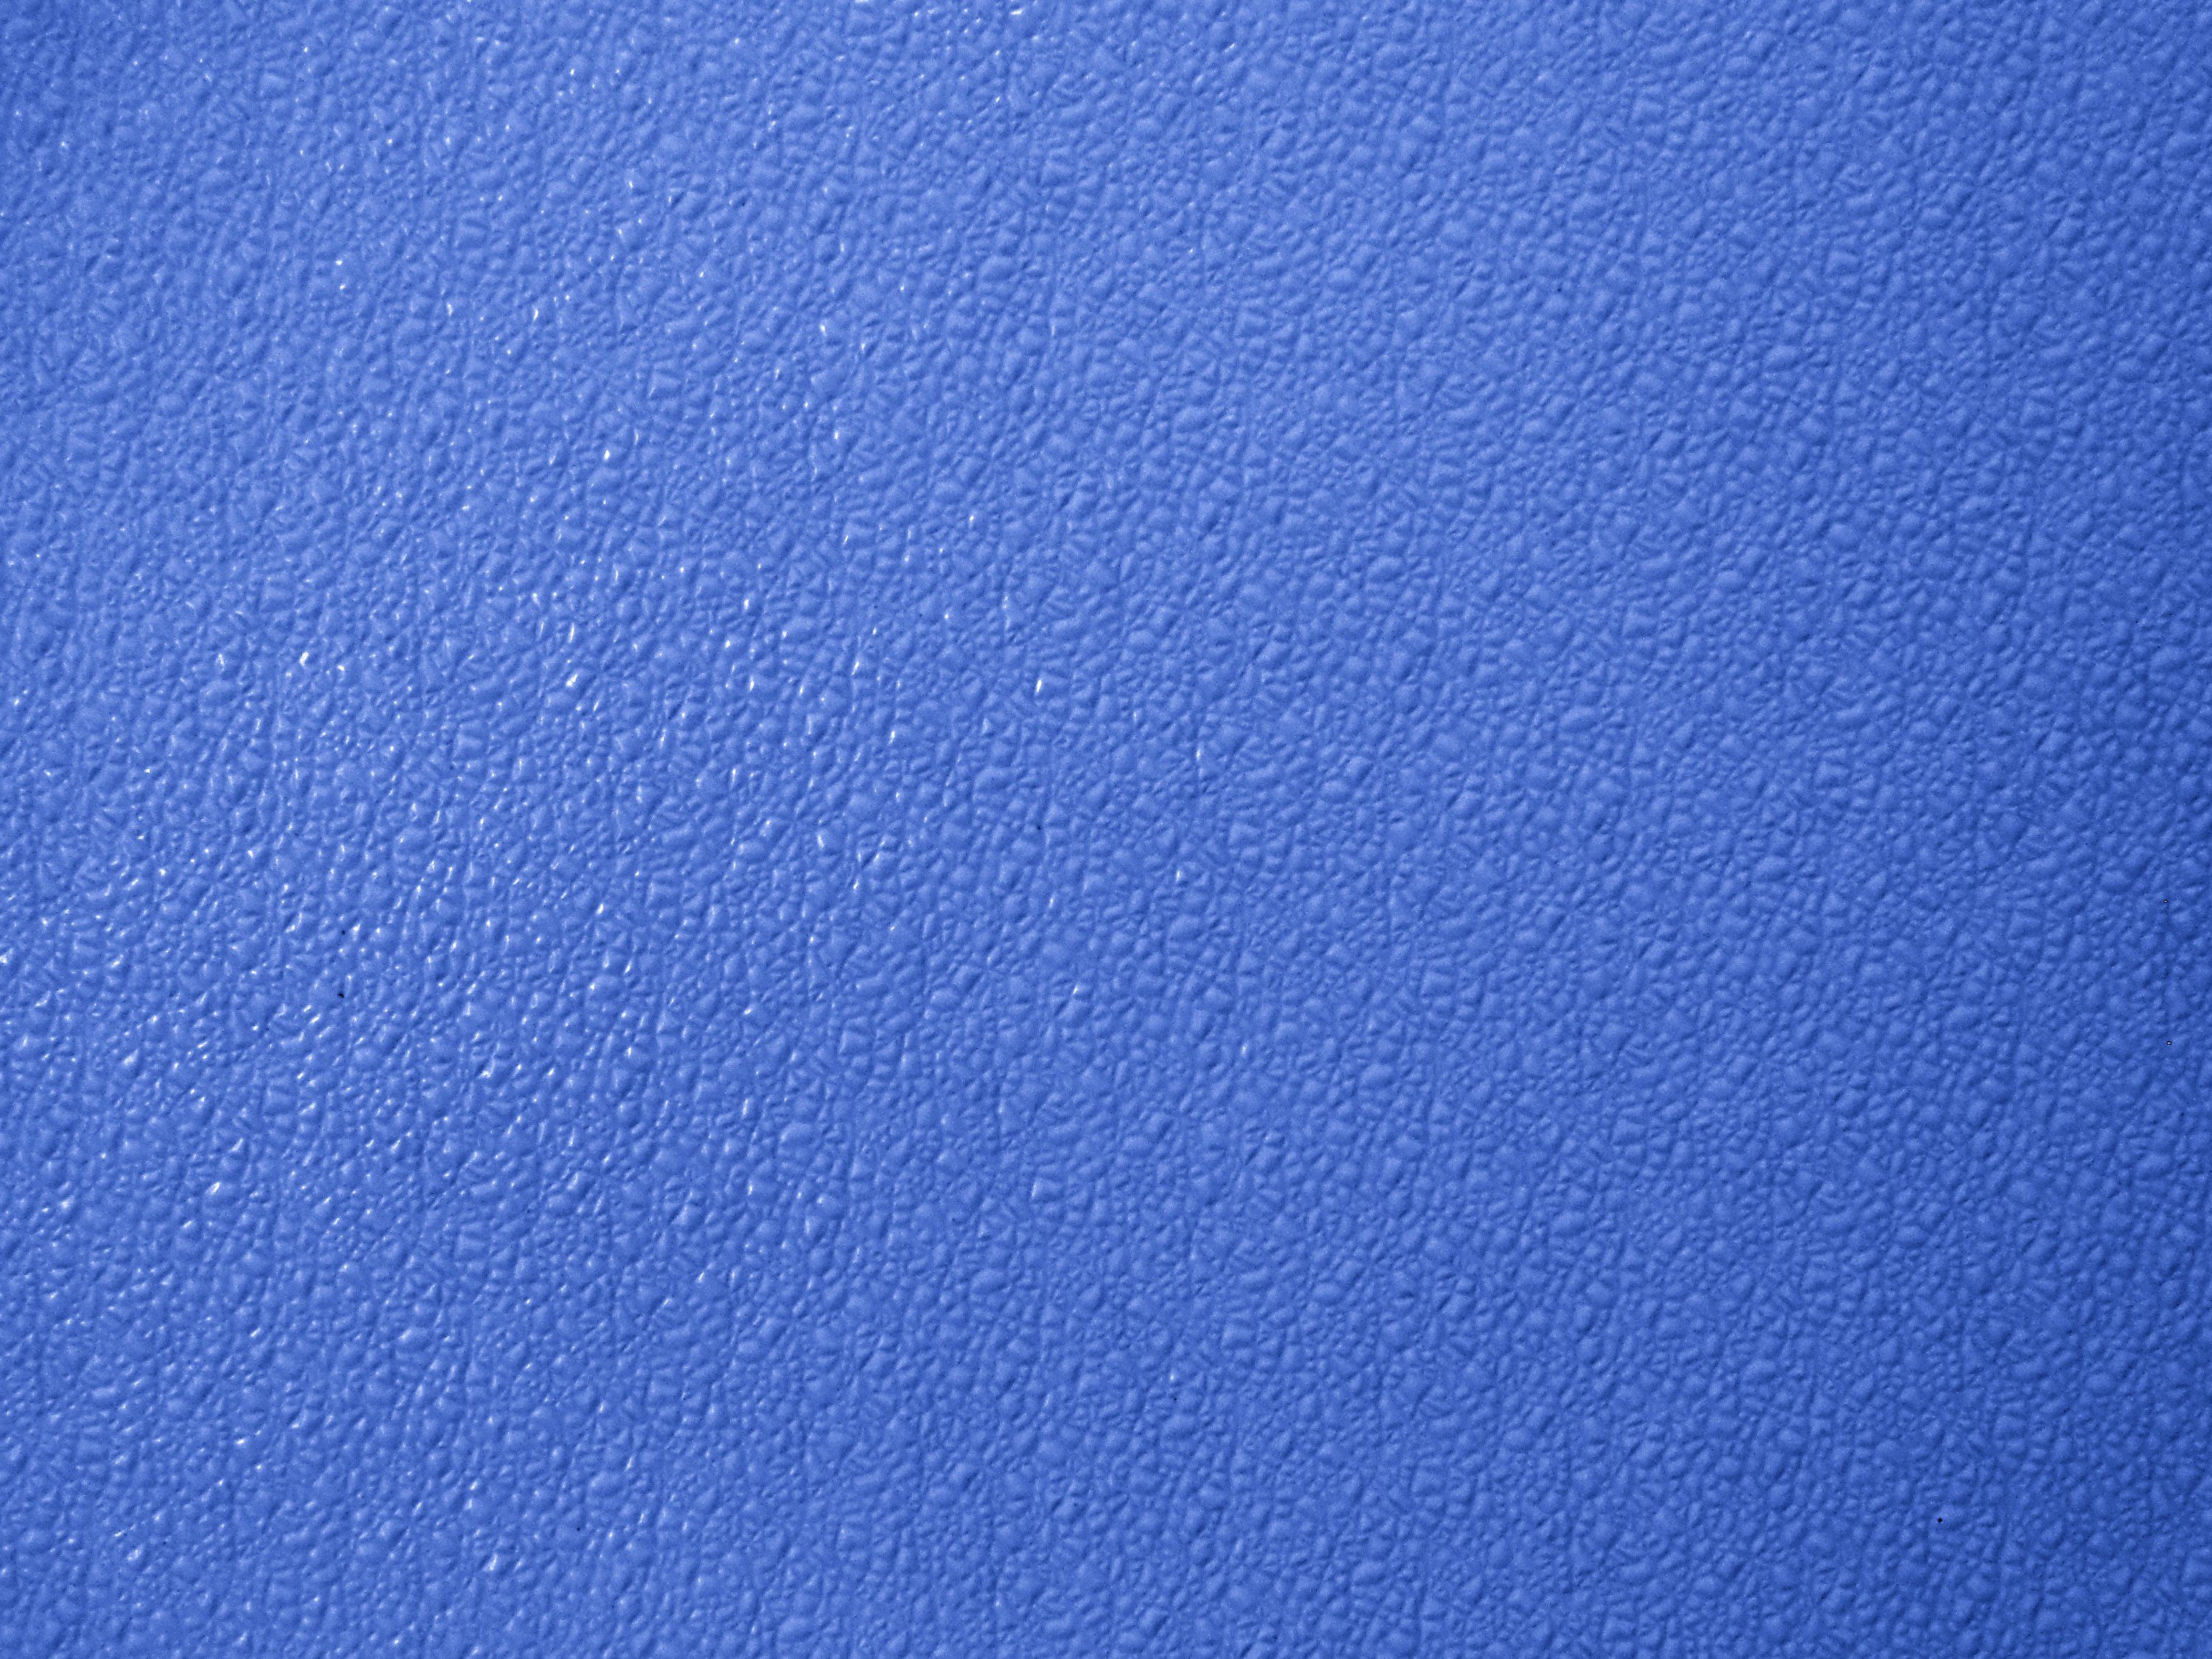 Bumpy Periwinkle Blue Plastic Texture Picture. Free Photograph